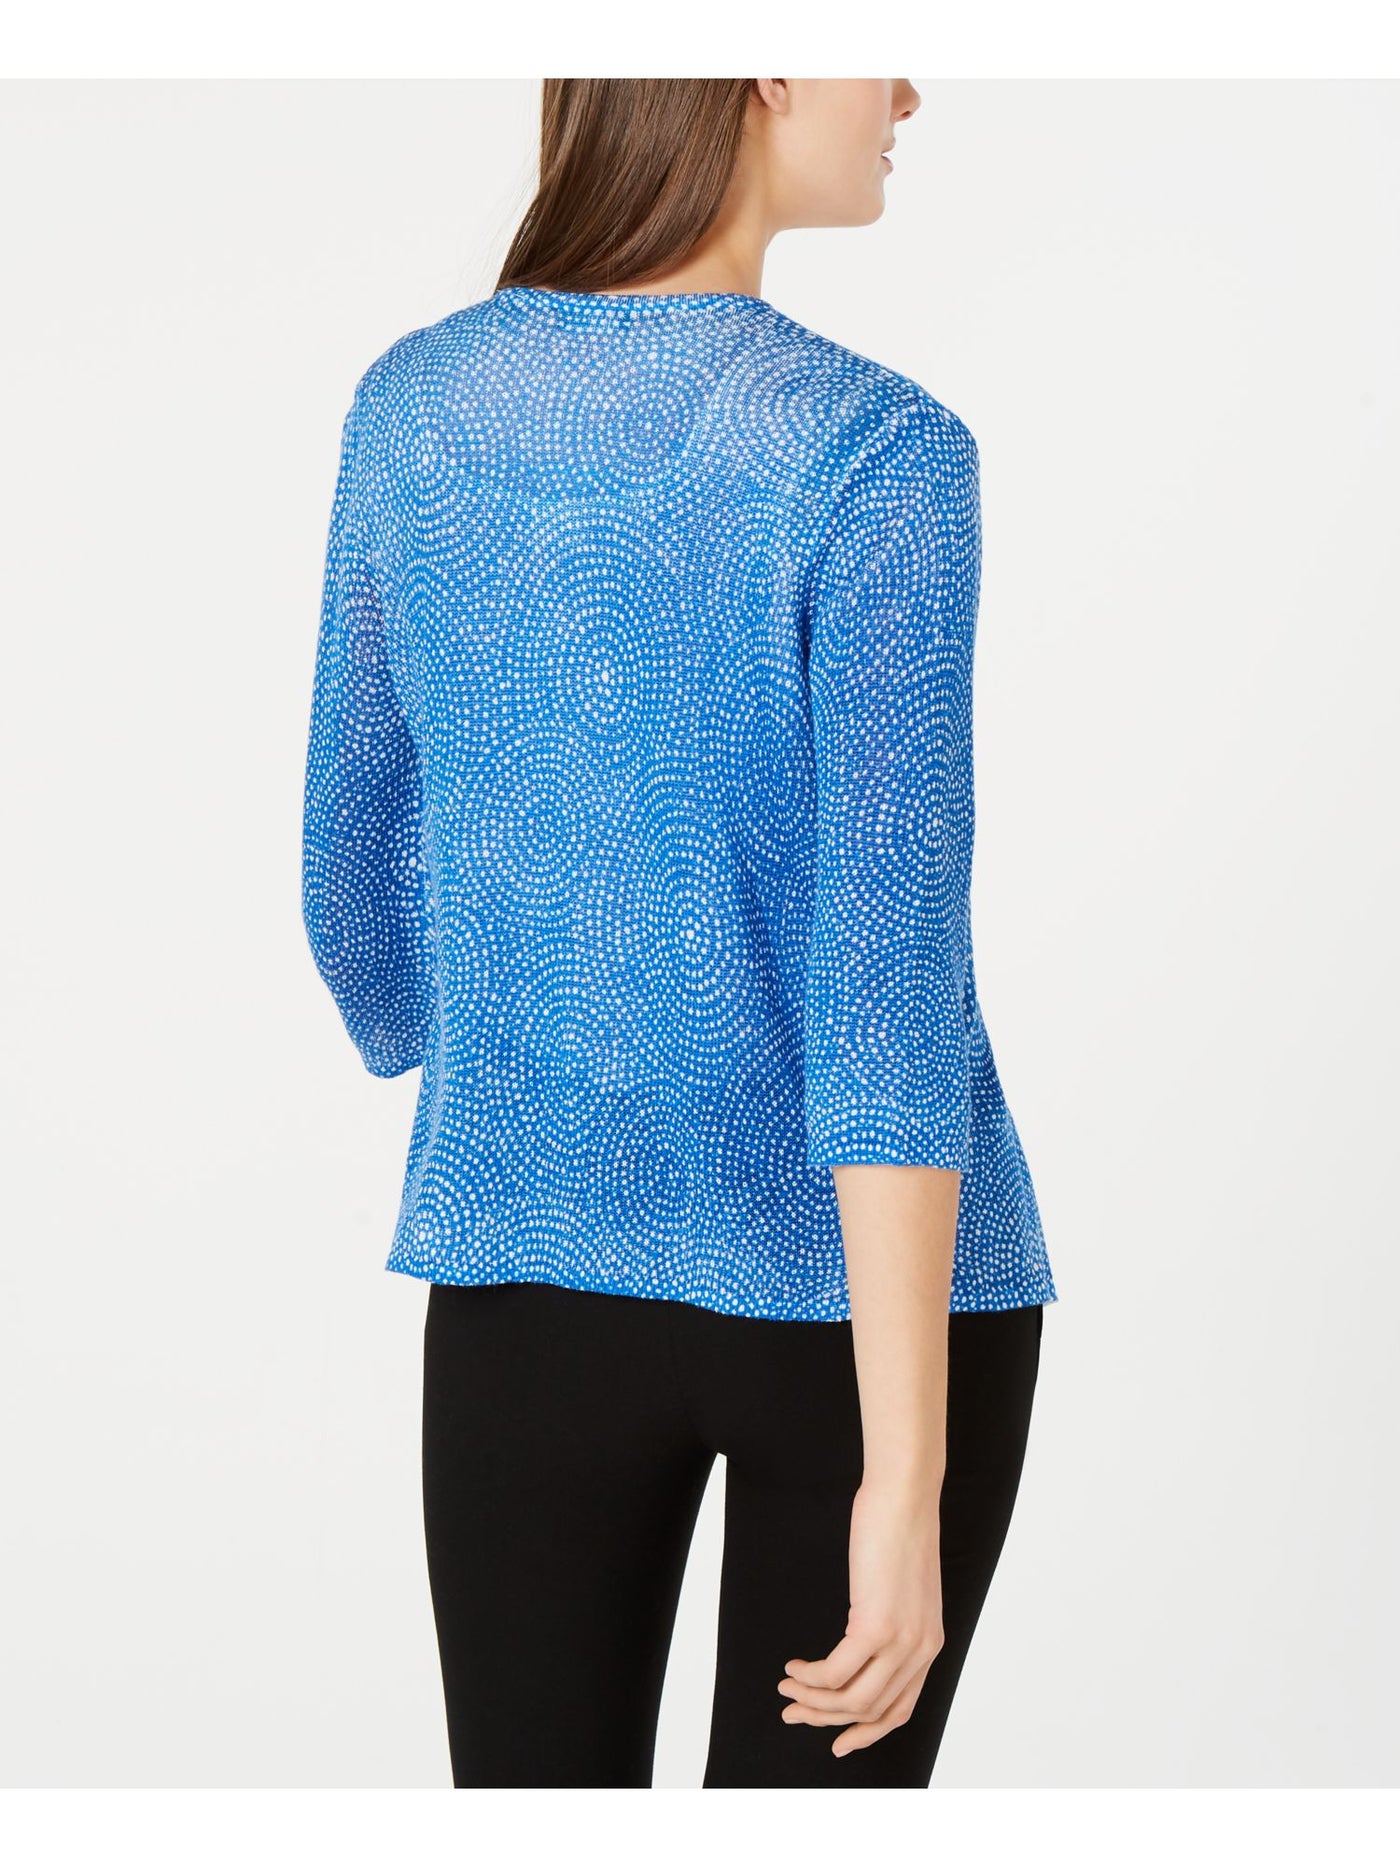 ALFANI Womens Blue Printed Long Sleeve Open Cardigan Sweater Size: S